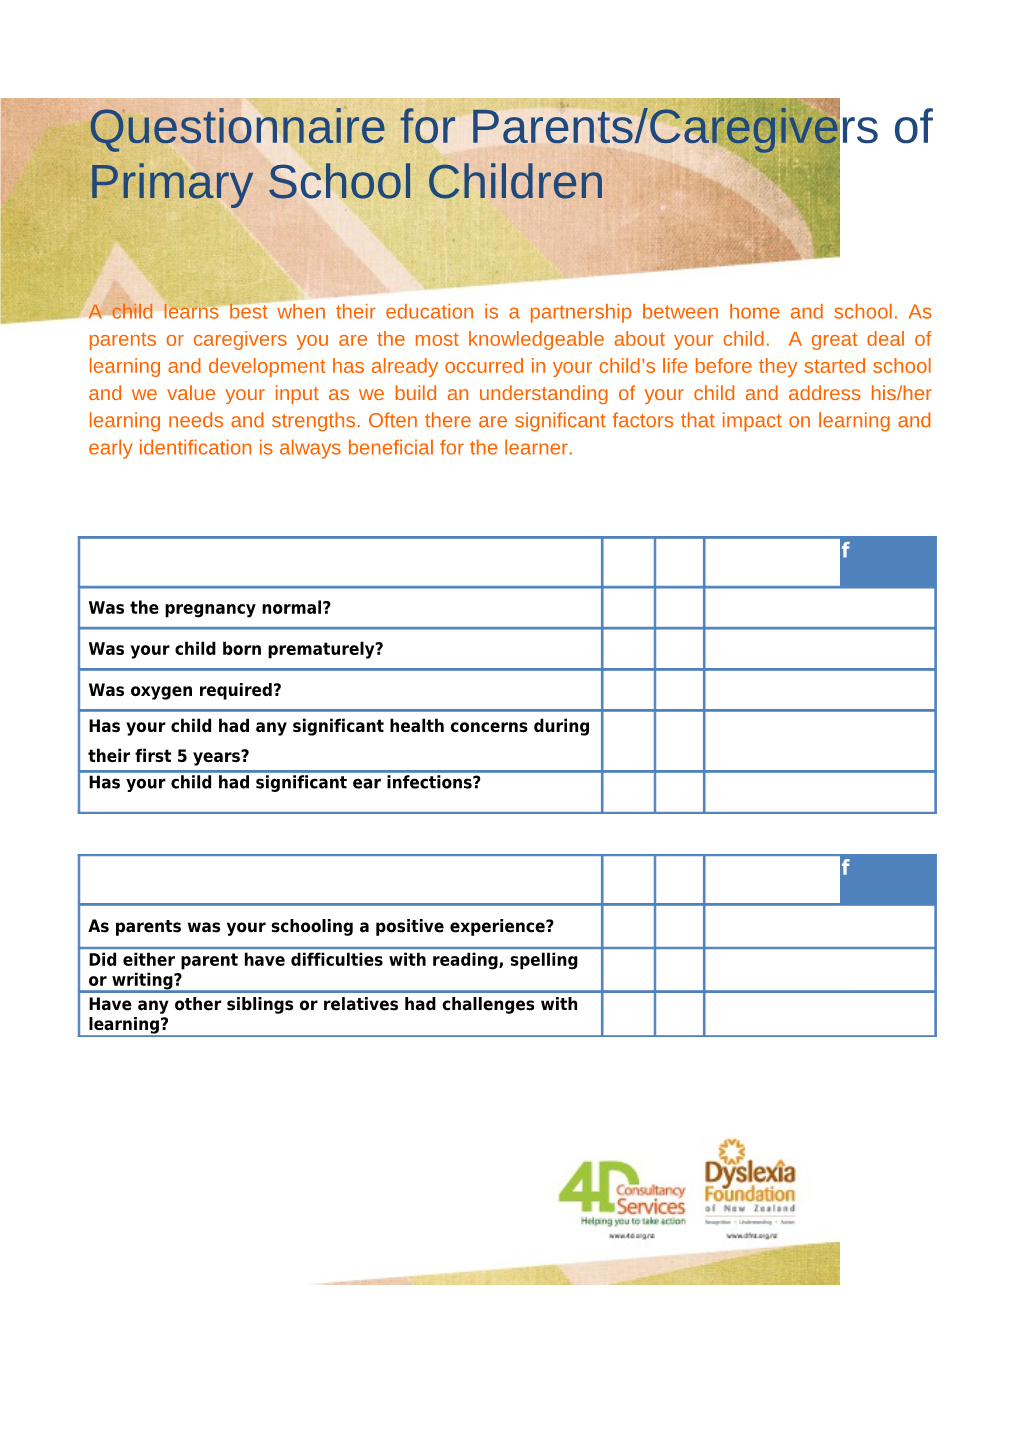 Questionnaire for Parents/Caregivers of Primary School Children